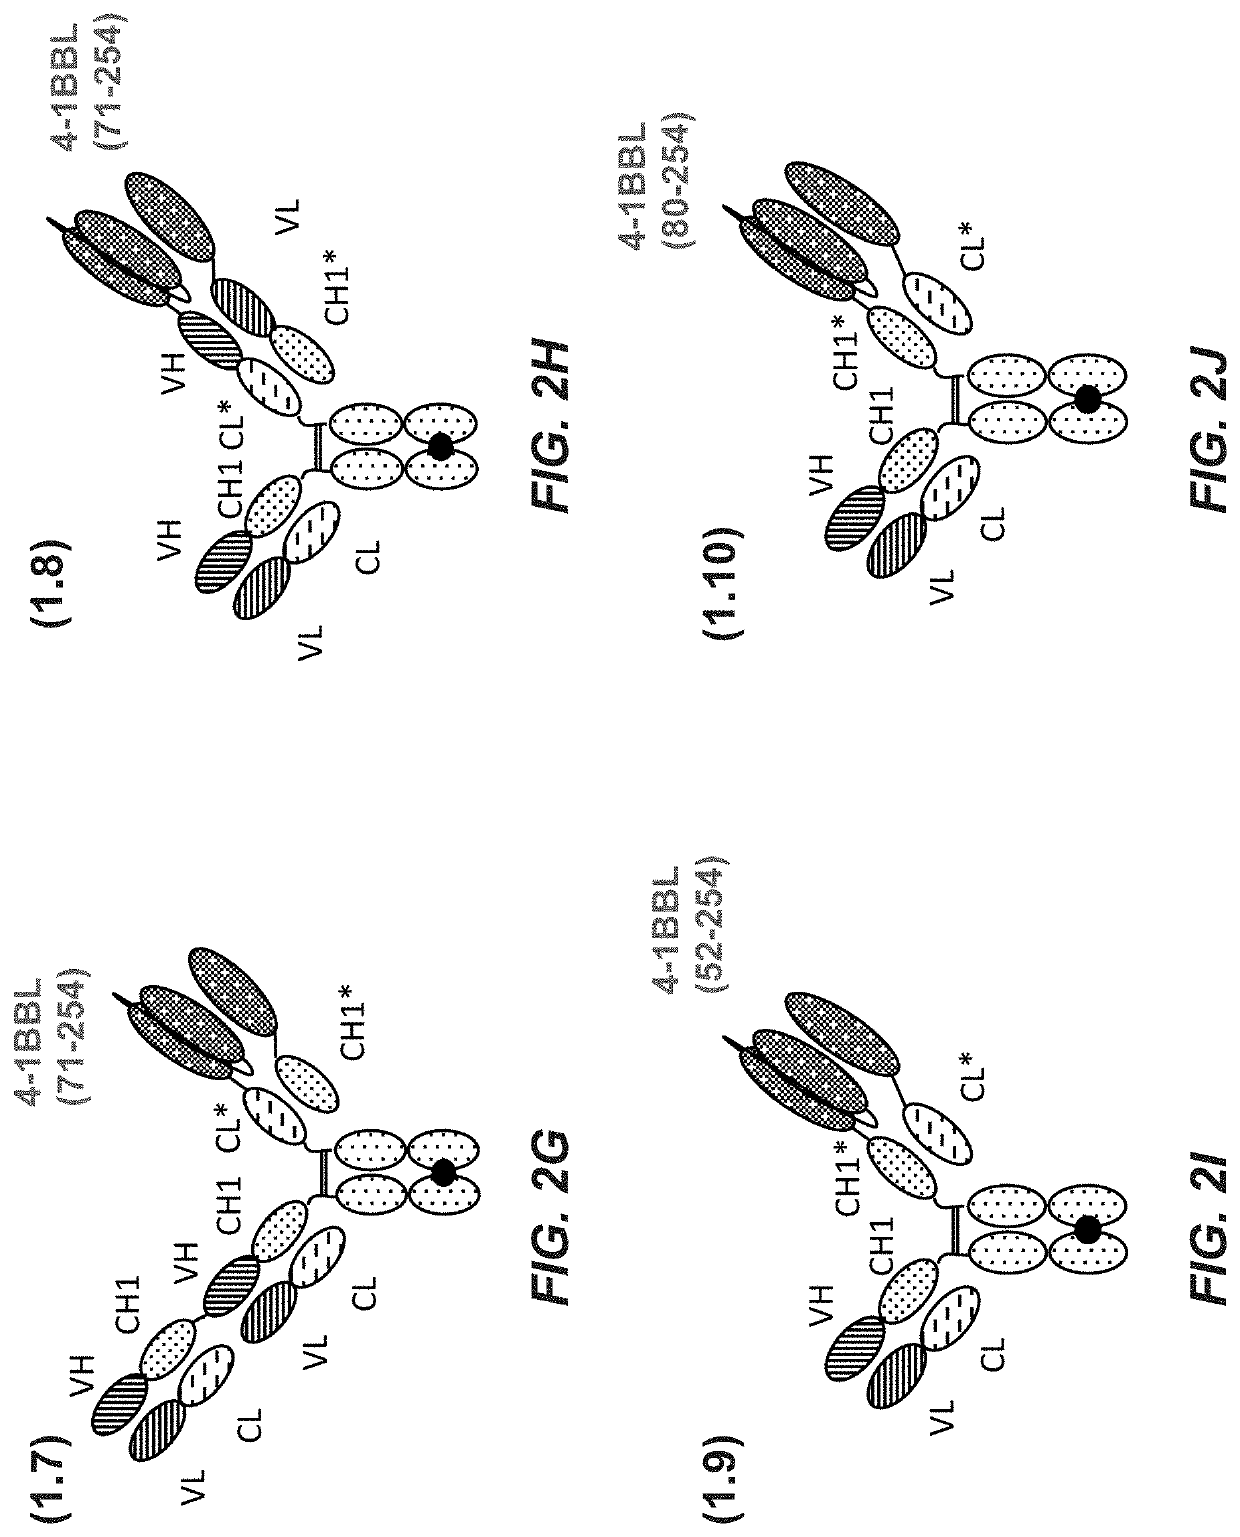 Antigen binding molecules comprising a TNF family ligand trimer